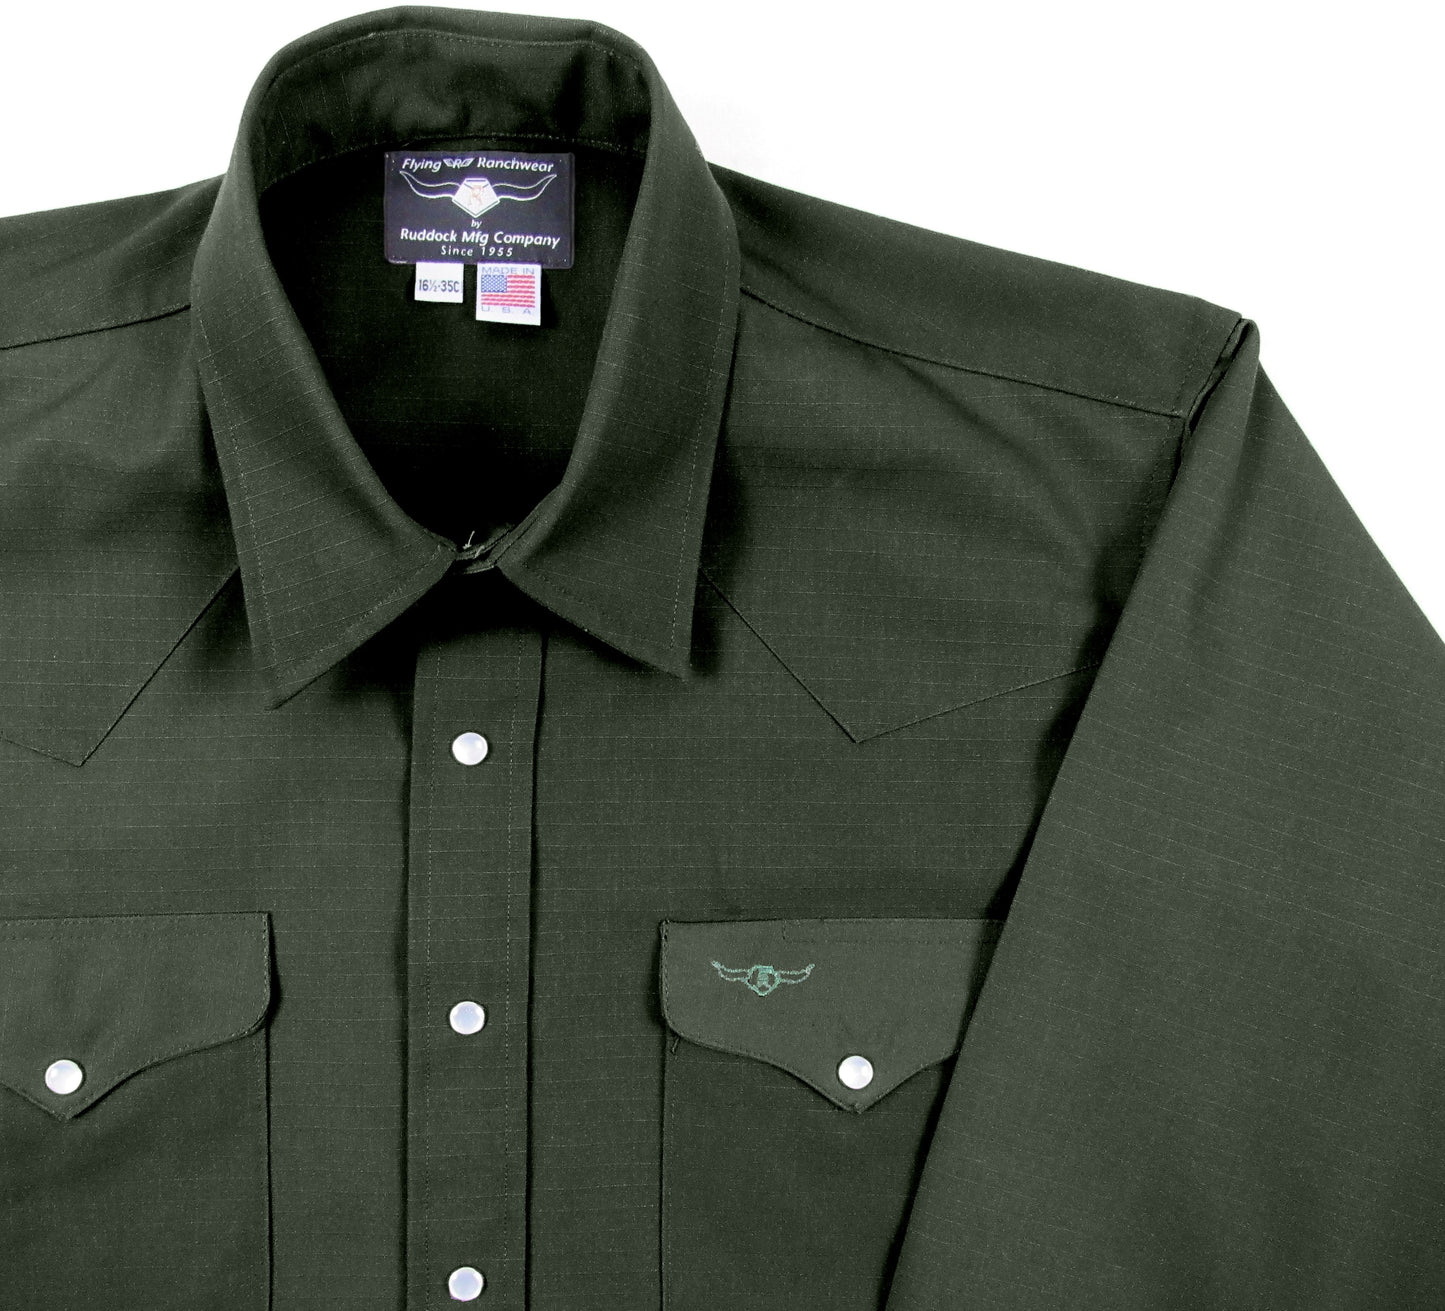 Flying R Ranchwear - Amarillo Ripstop - Safari Green - Long Sleeve - Snaps